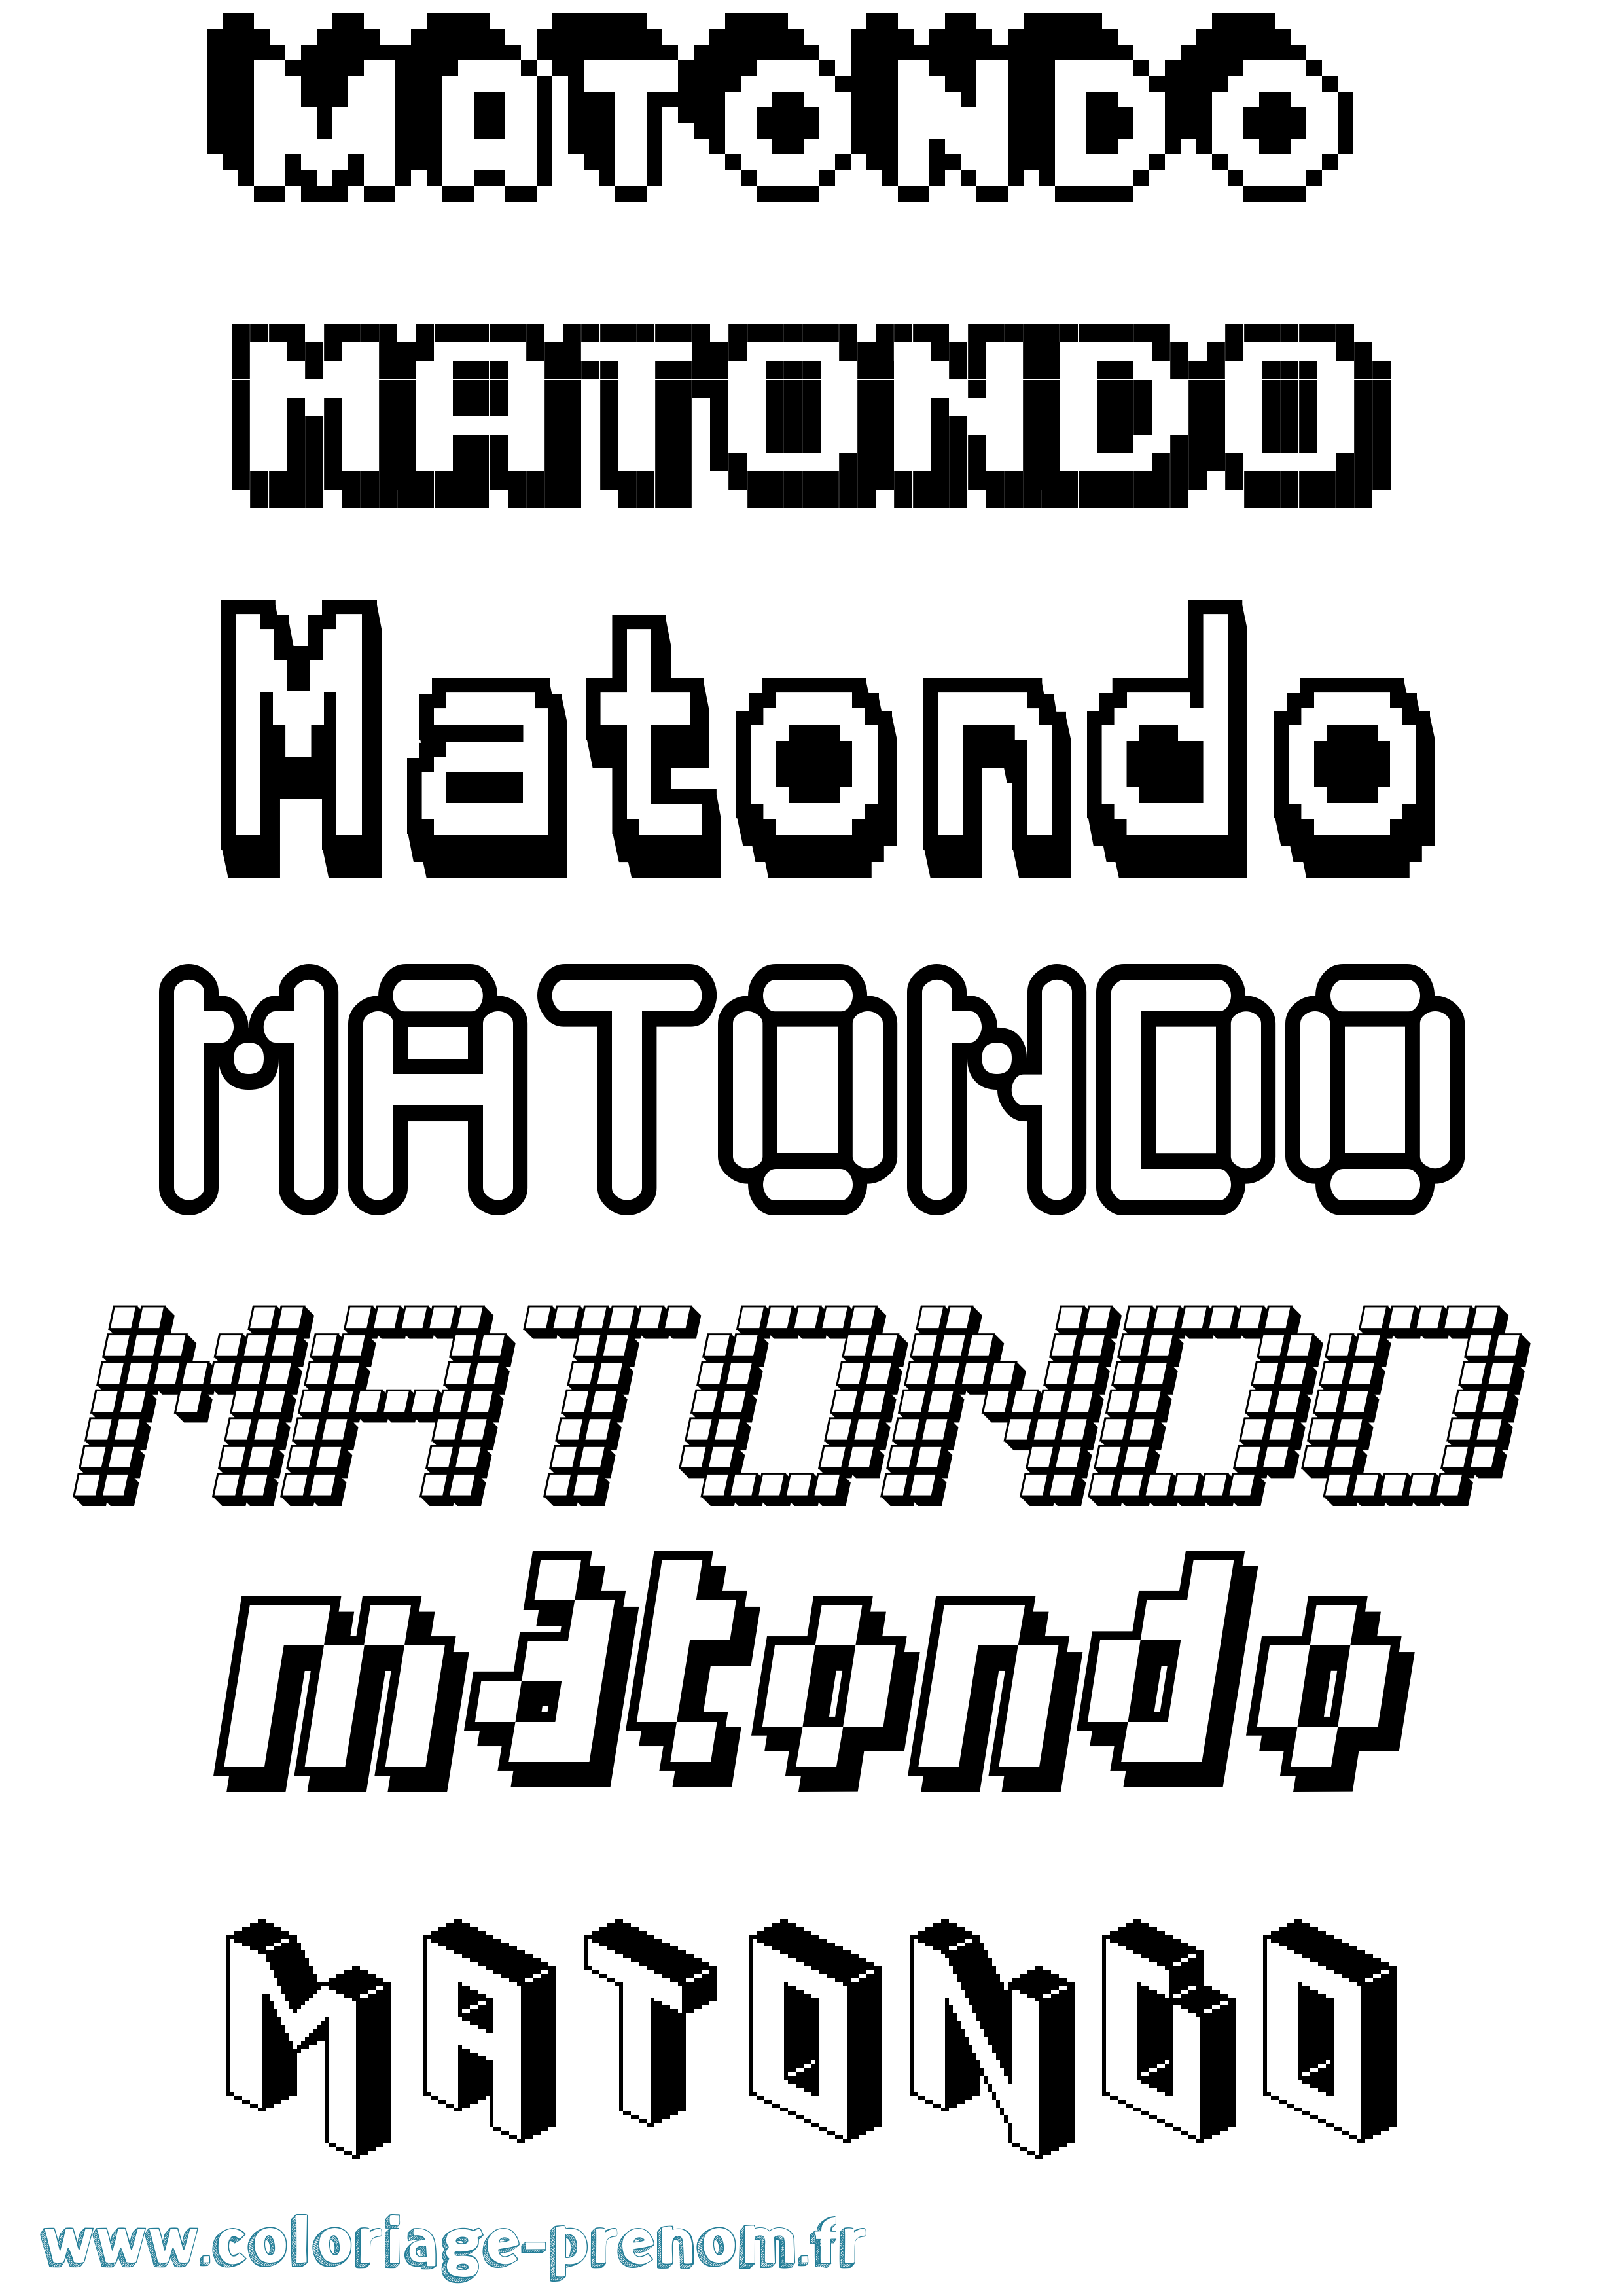 Coloriage prénom Matondo Pixel